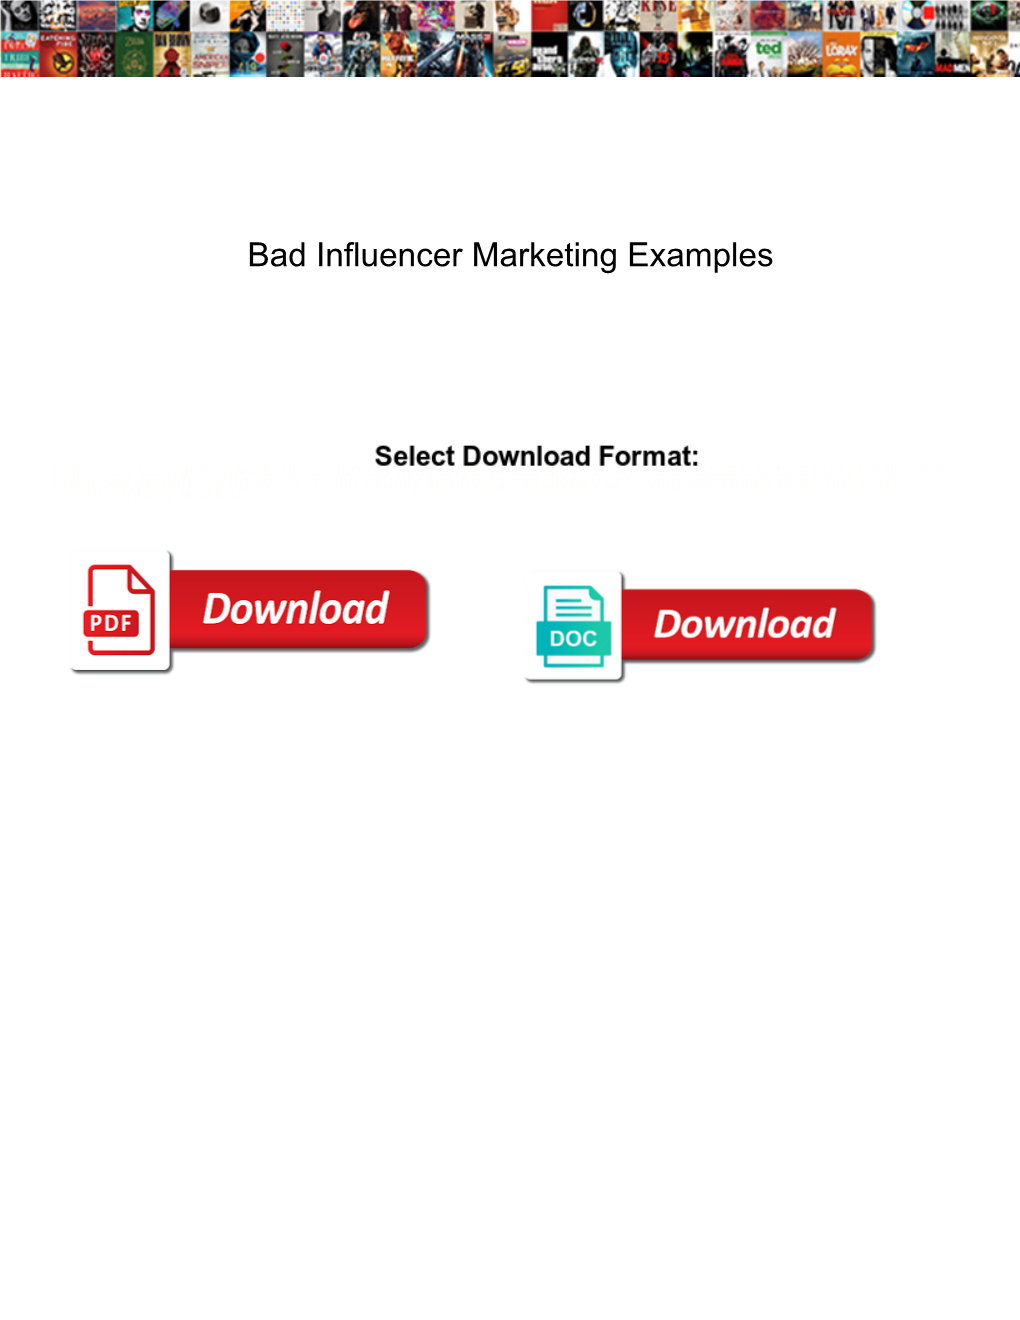 Bad Influencer Marketing Examples